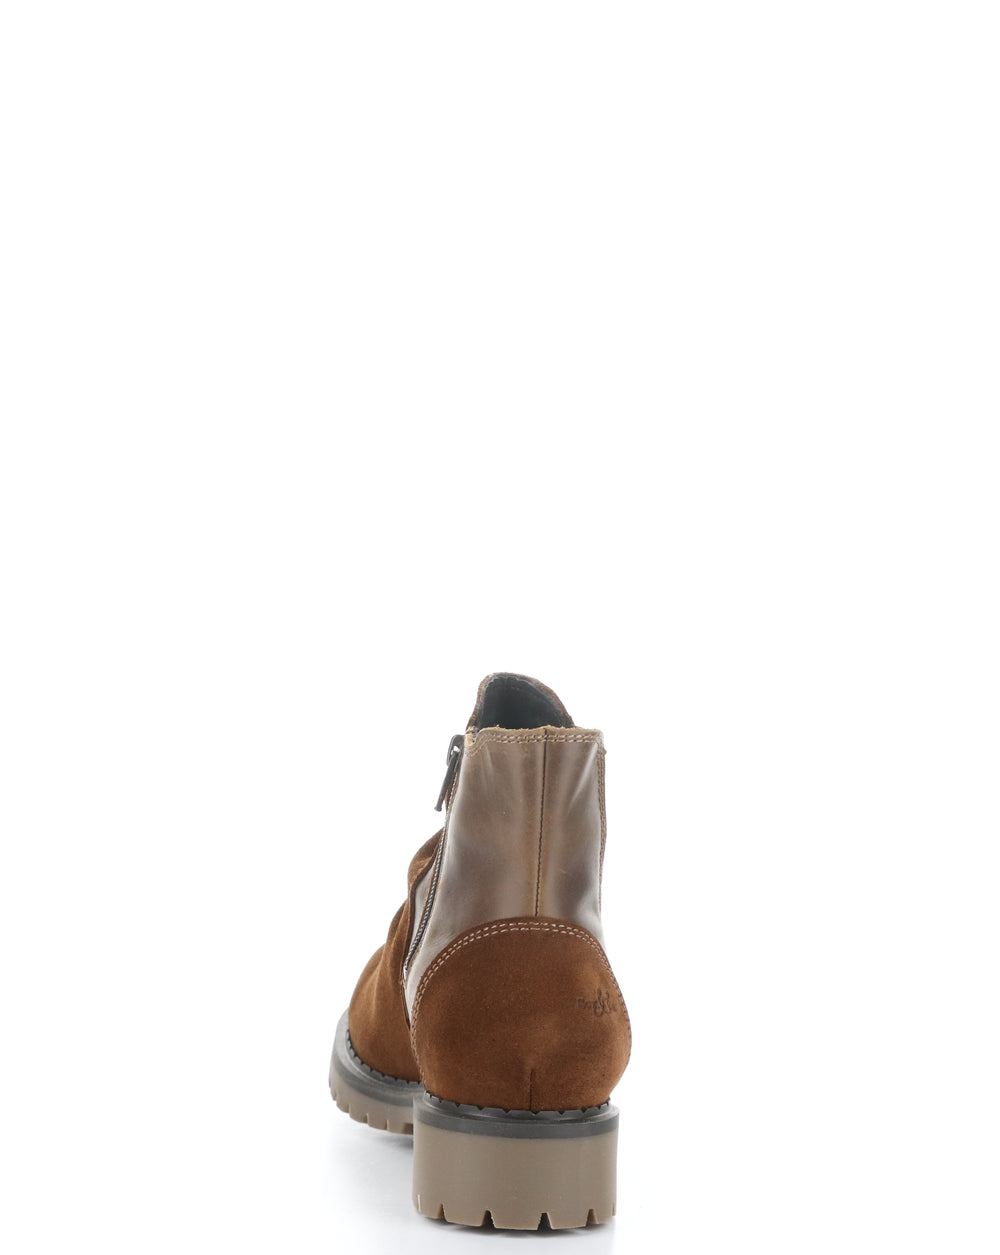 BARB REDWOOD/CAMEL Elasticated Boots